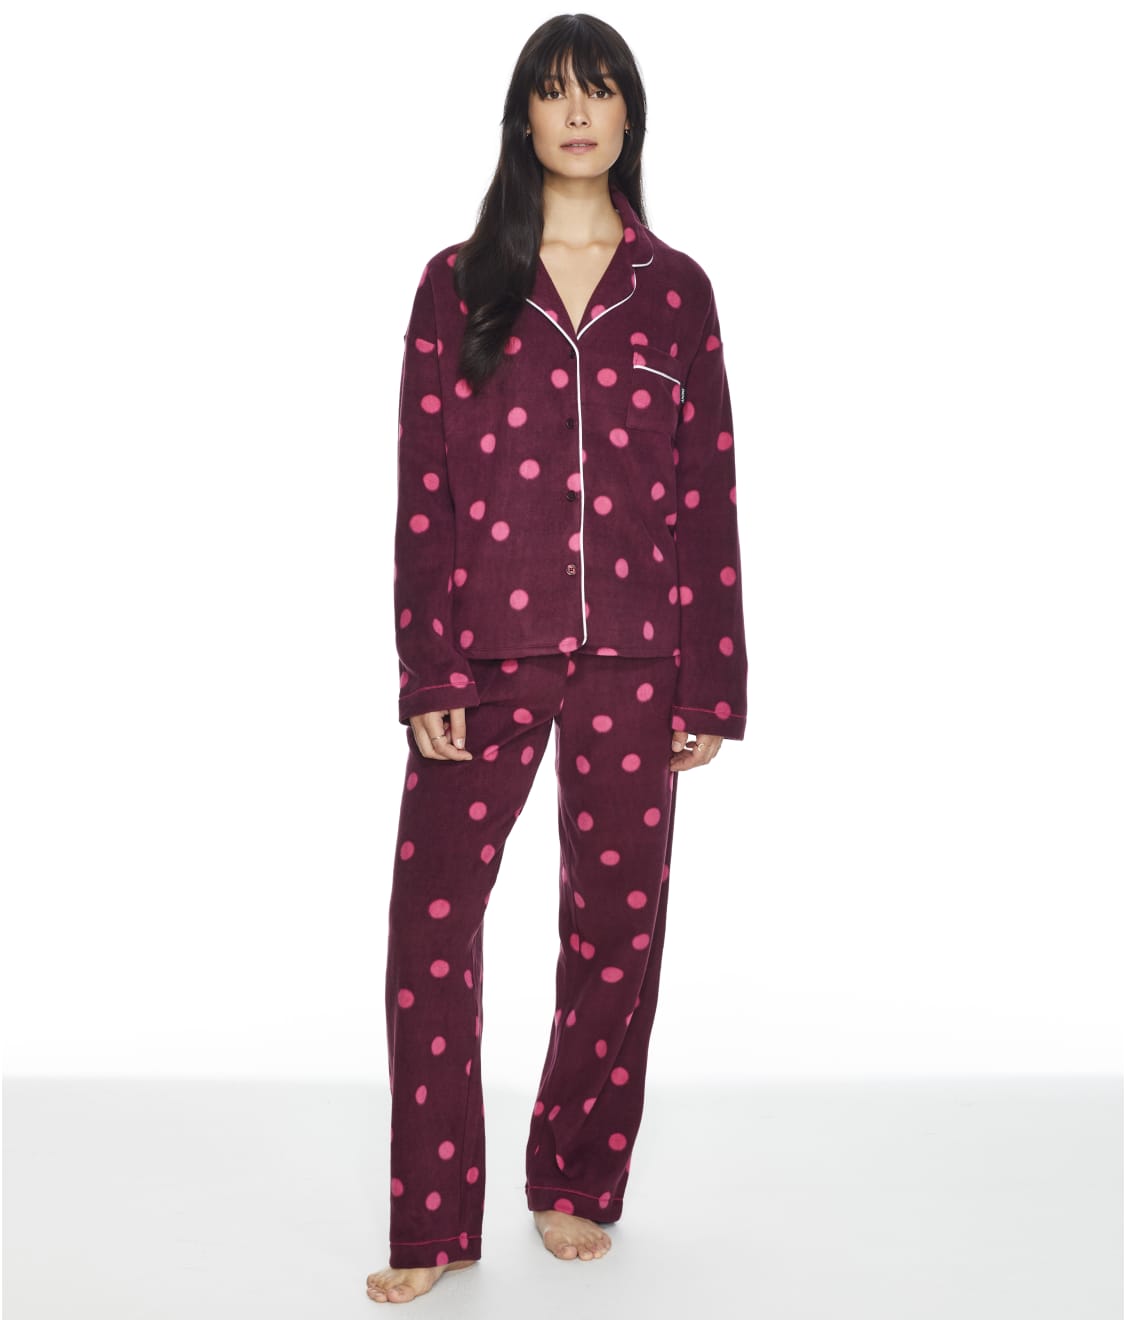 DKNY Sleepwear: Fleece Pajama Set Y2822497